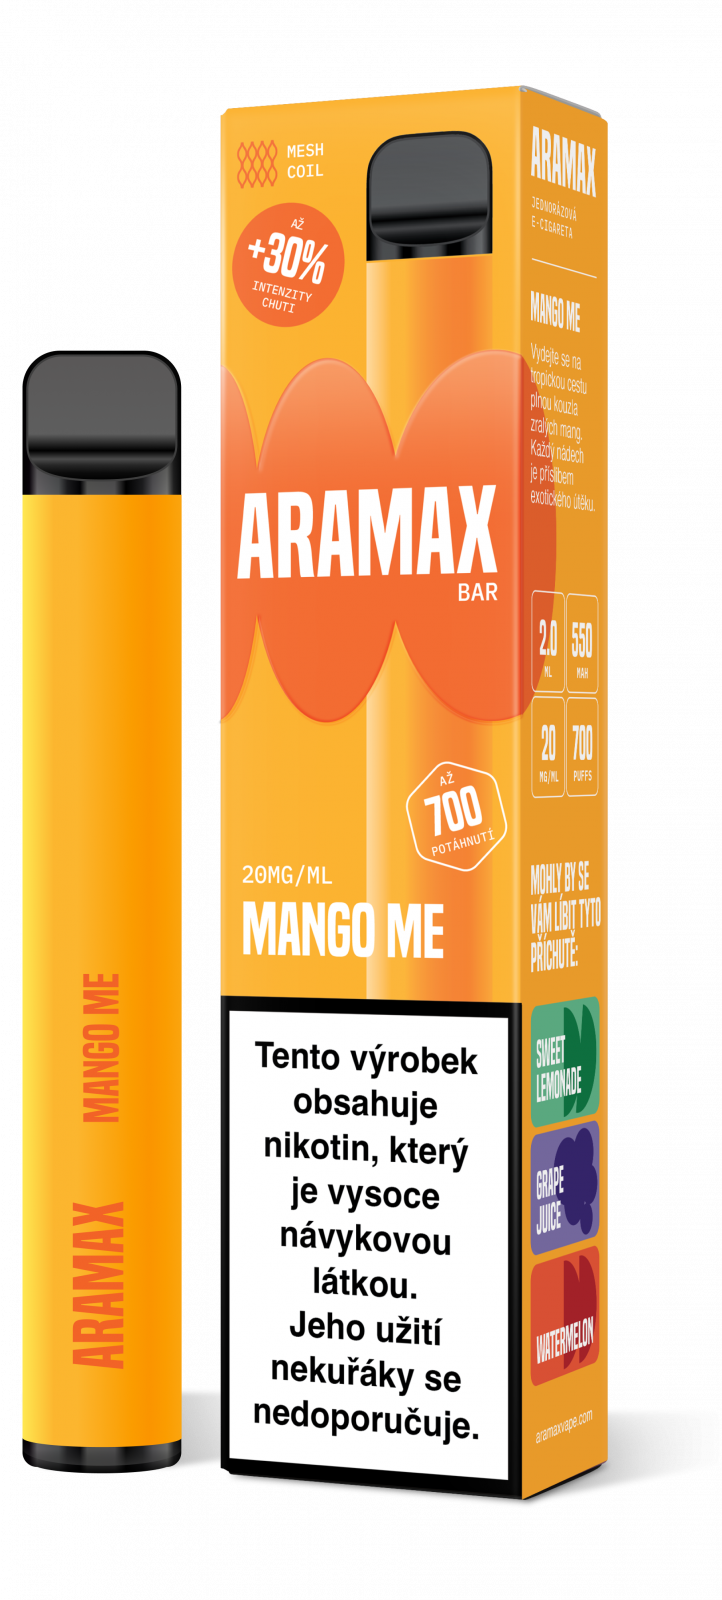 MANGO ME 20mg/ml - Aramax Bar 700 - jednorazová e-cigareta